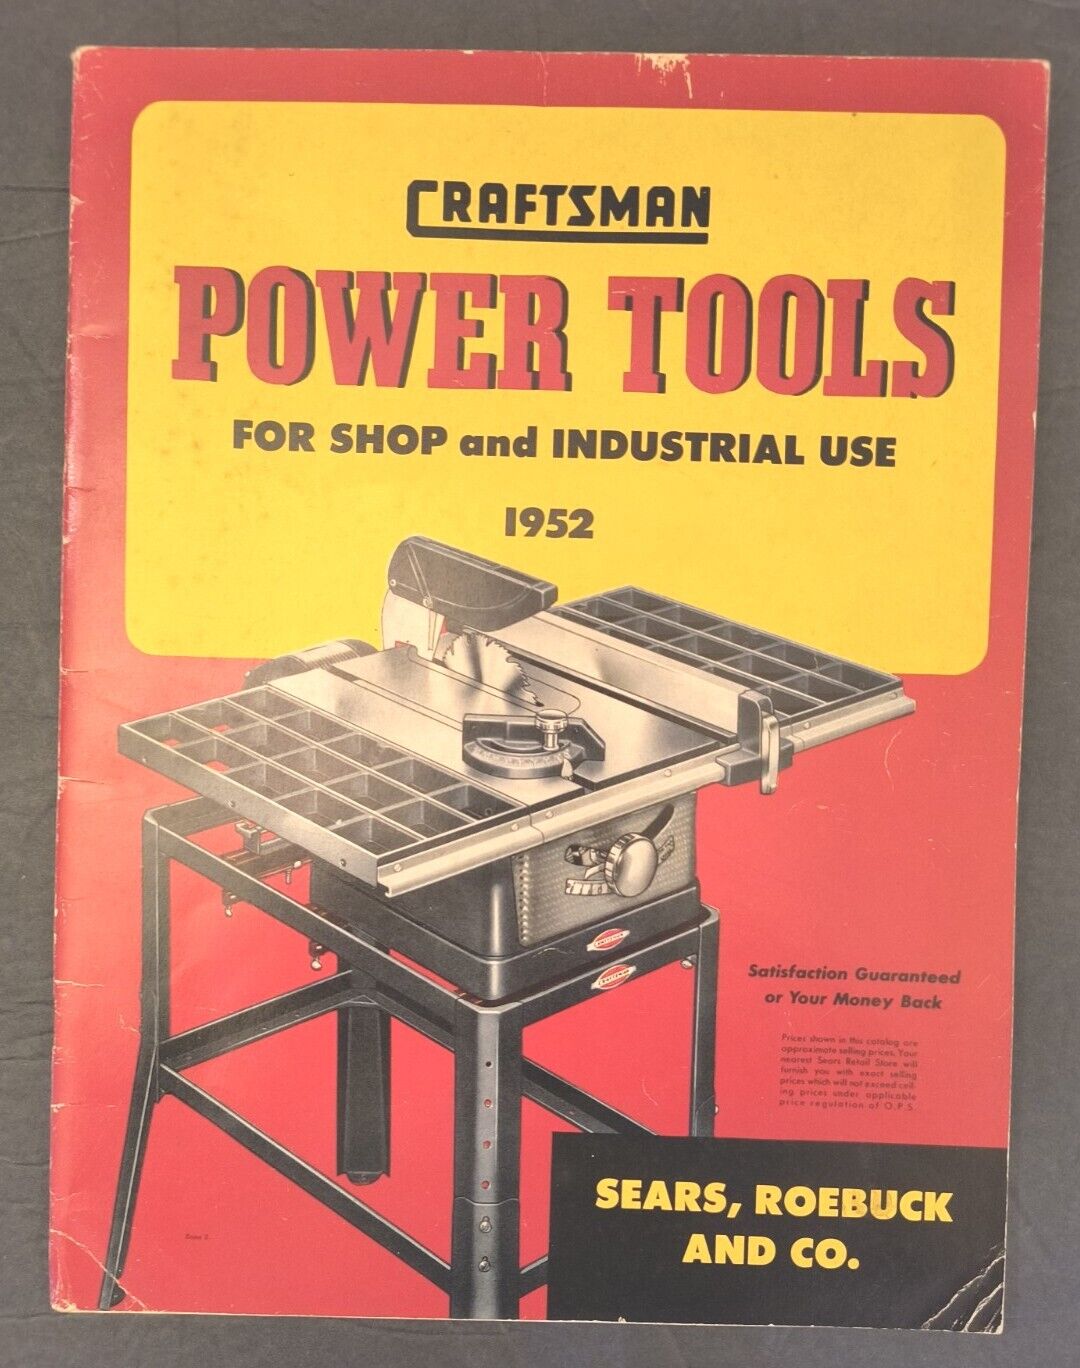 Vintage 1952 Sears and Roebuck Craftsman Tools Catalog Power Tools Advertising